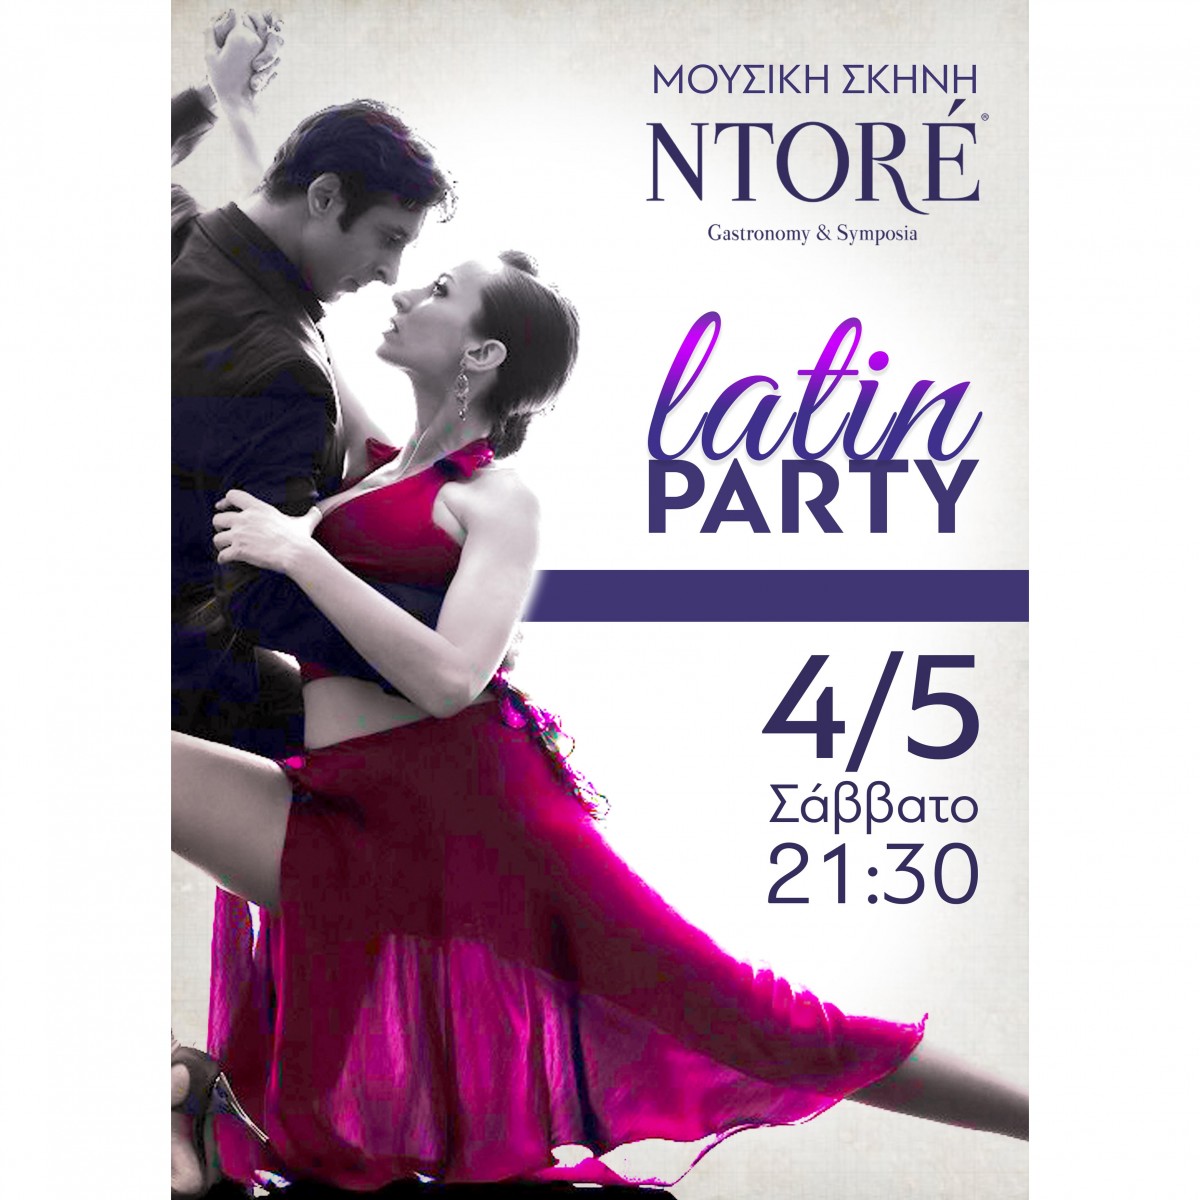 Latin Party στη Μουσική Σκηνή του Ntoré, Σάββατο 4 Μαΐου, 21:30